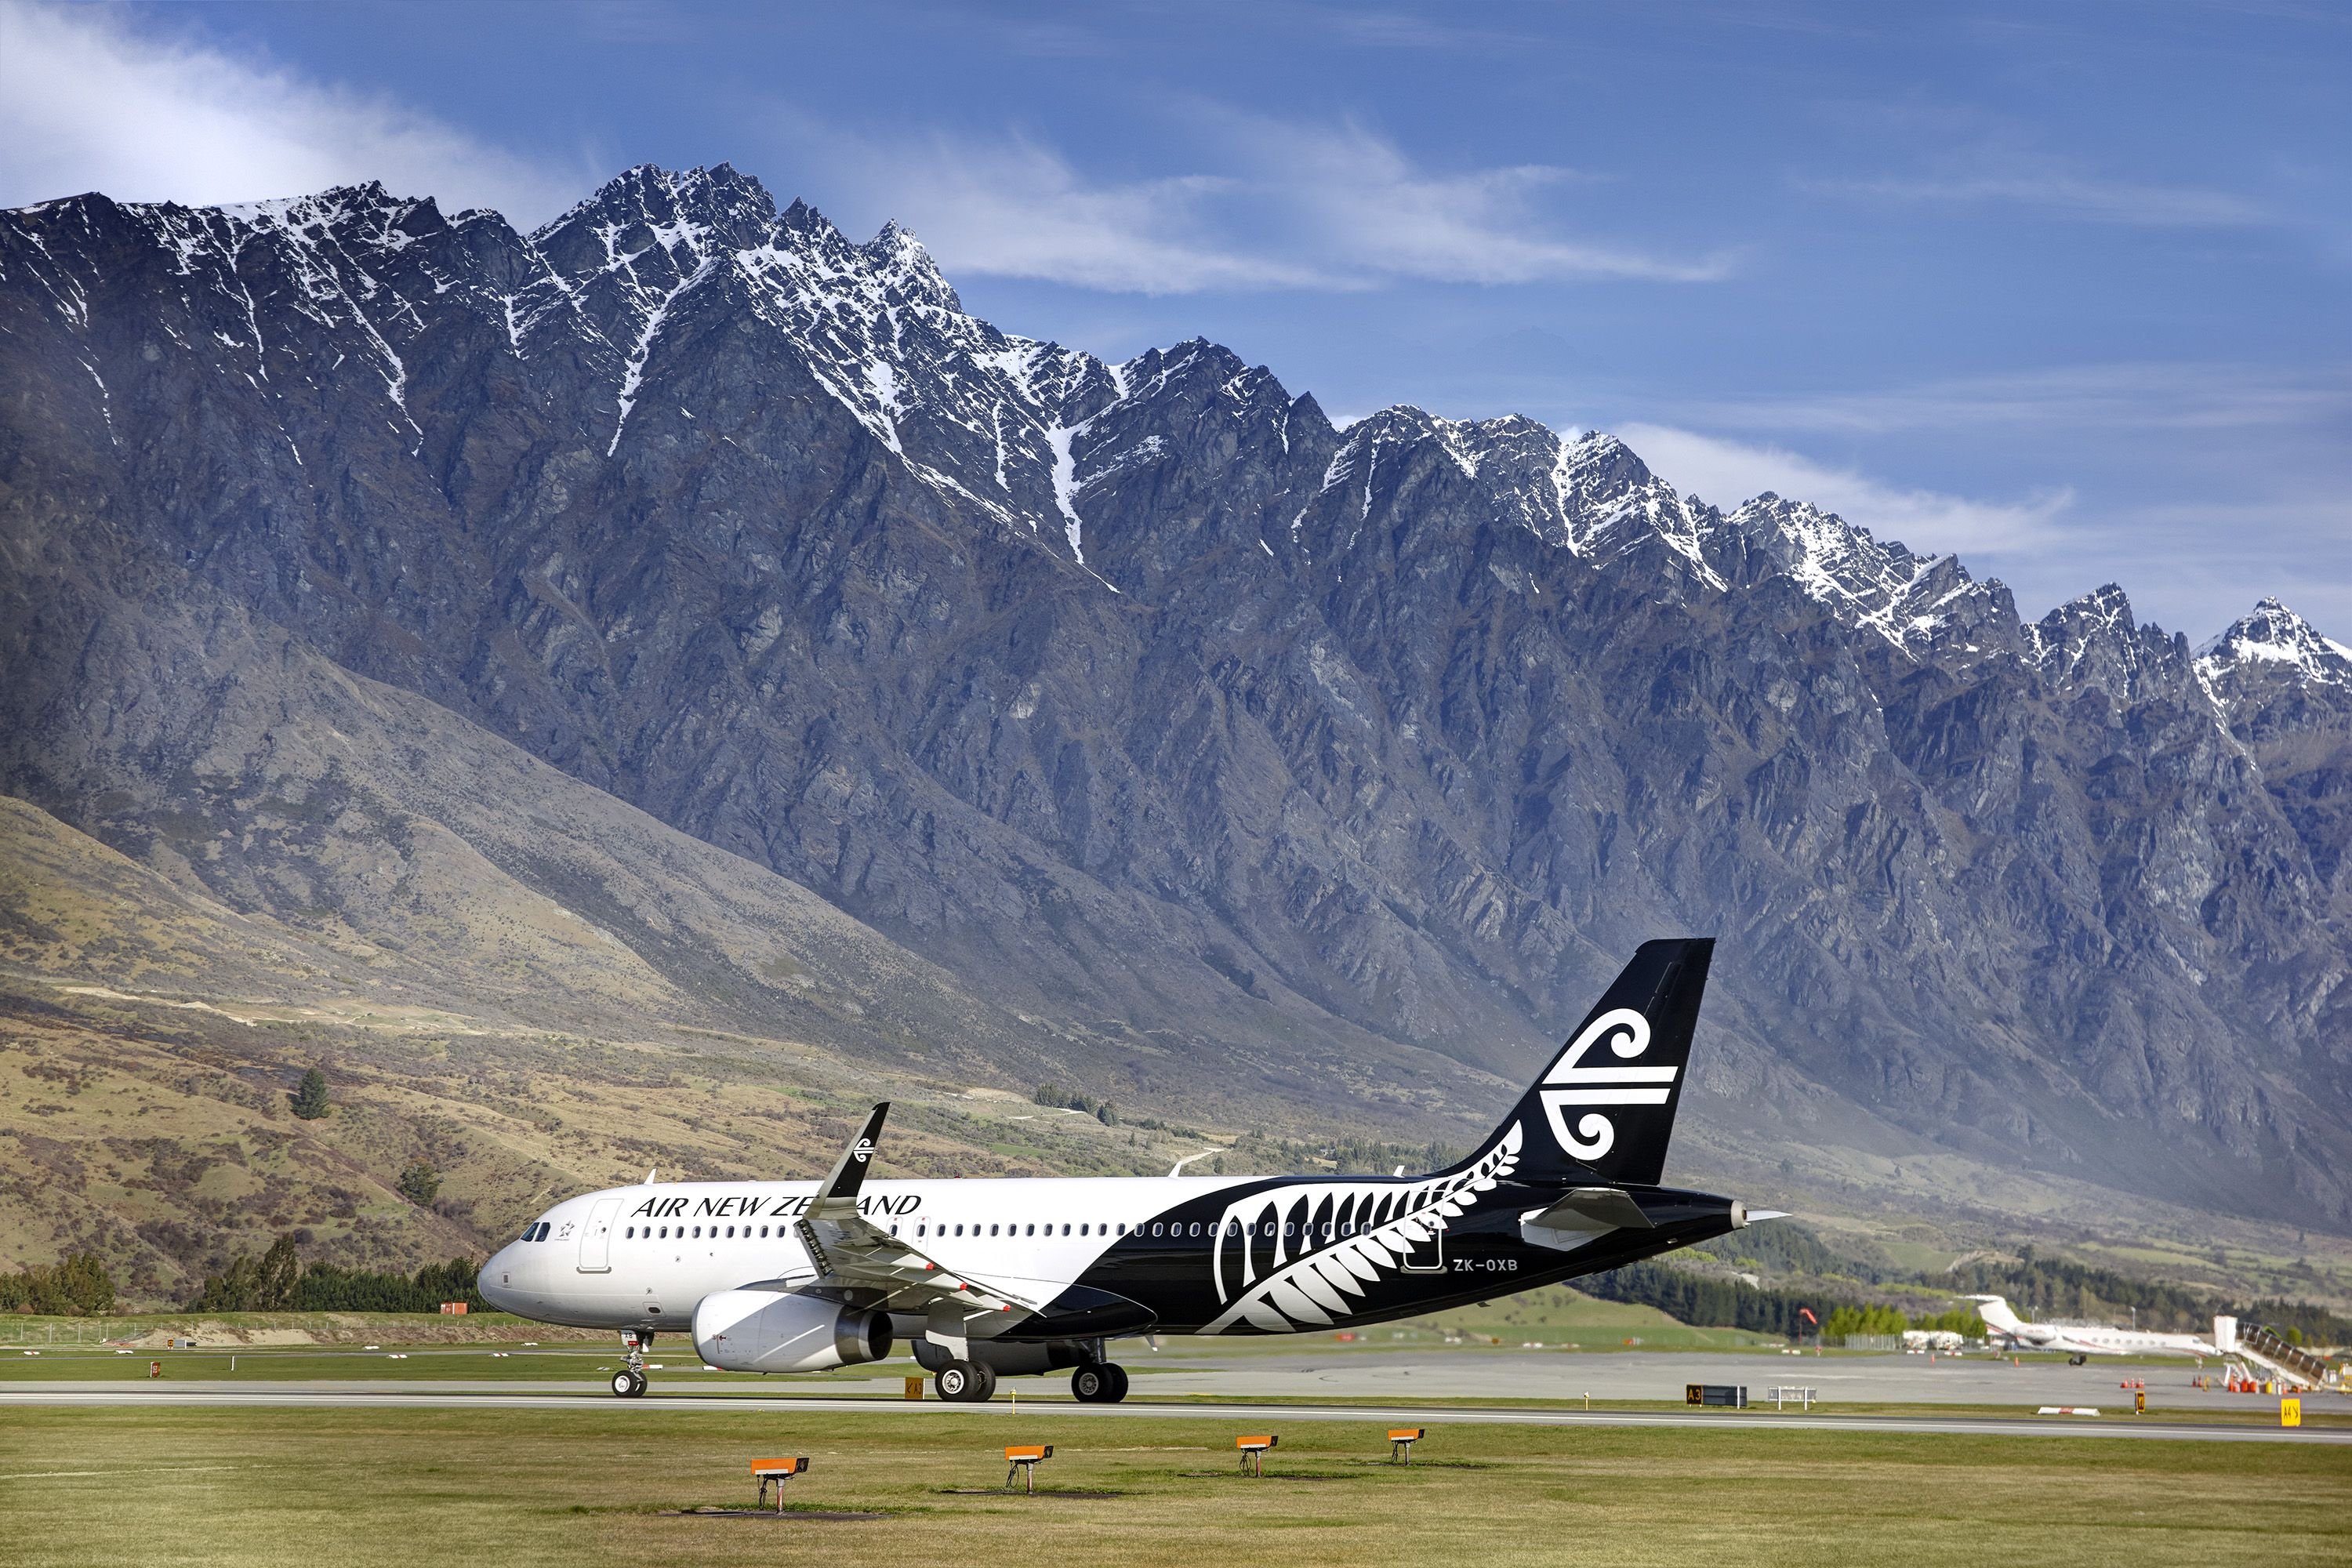 Air new zealand. Air New Zealand самолеты. Аэропорт Квинстаун новая Зеландия. Airbus a320 Air New Zealand. Самолет черный Air New Zealand.